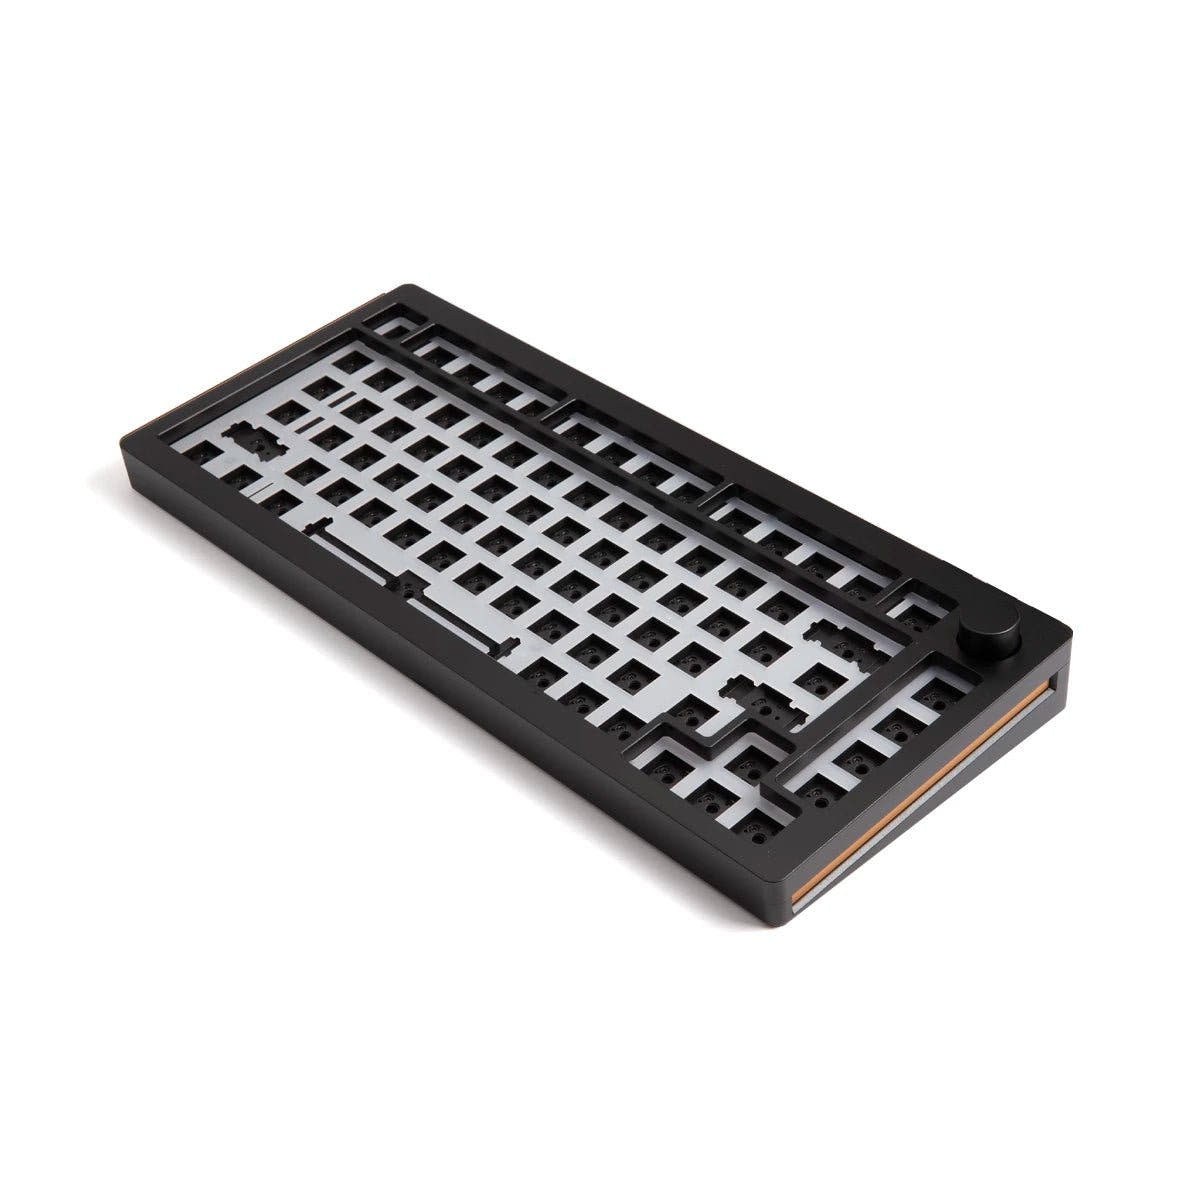 Monsgeek M1 75% Keyboard Kit